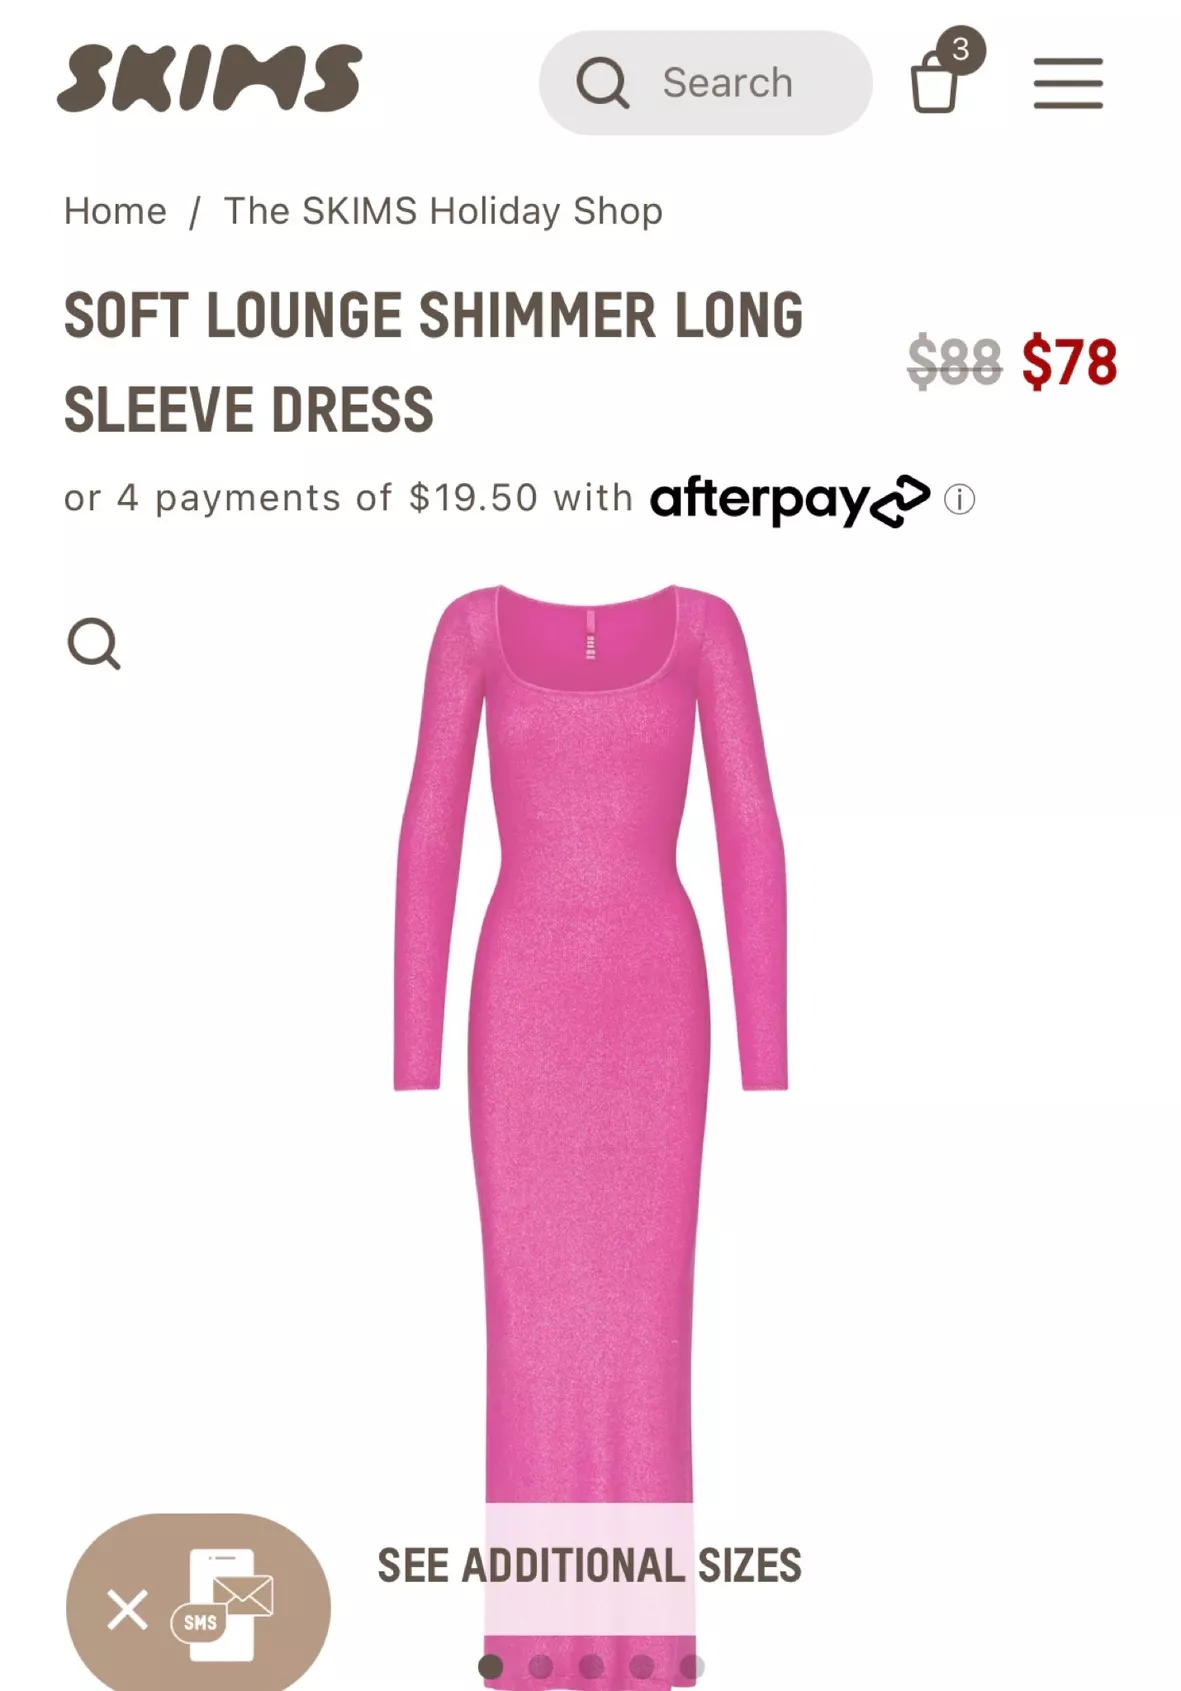 SOFT LOUNGE SHIMMER LONG SLIP DRESS curated on LTK